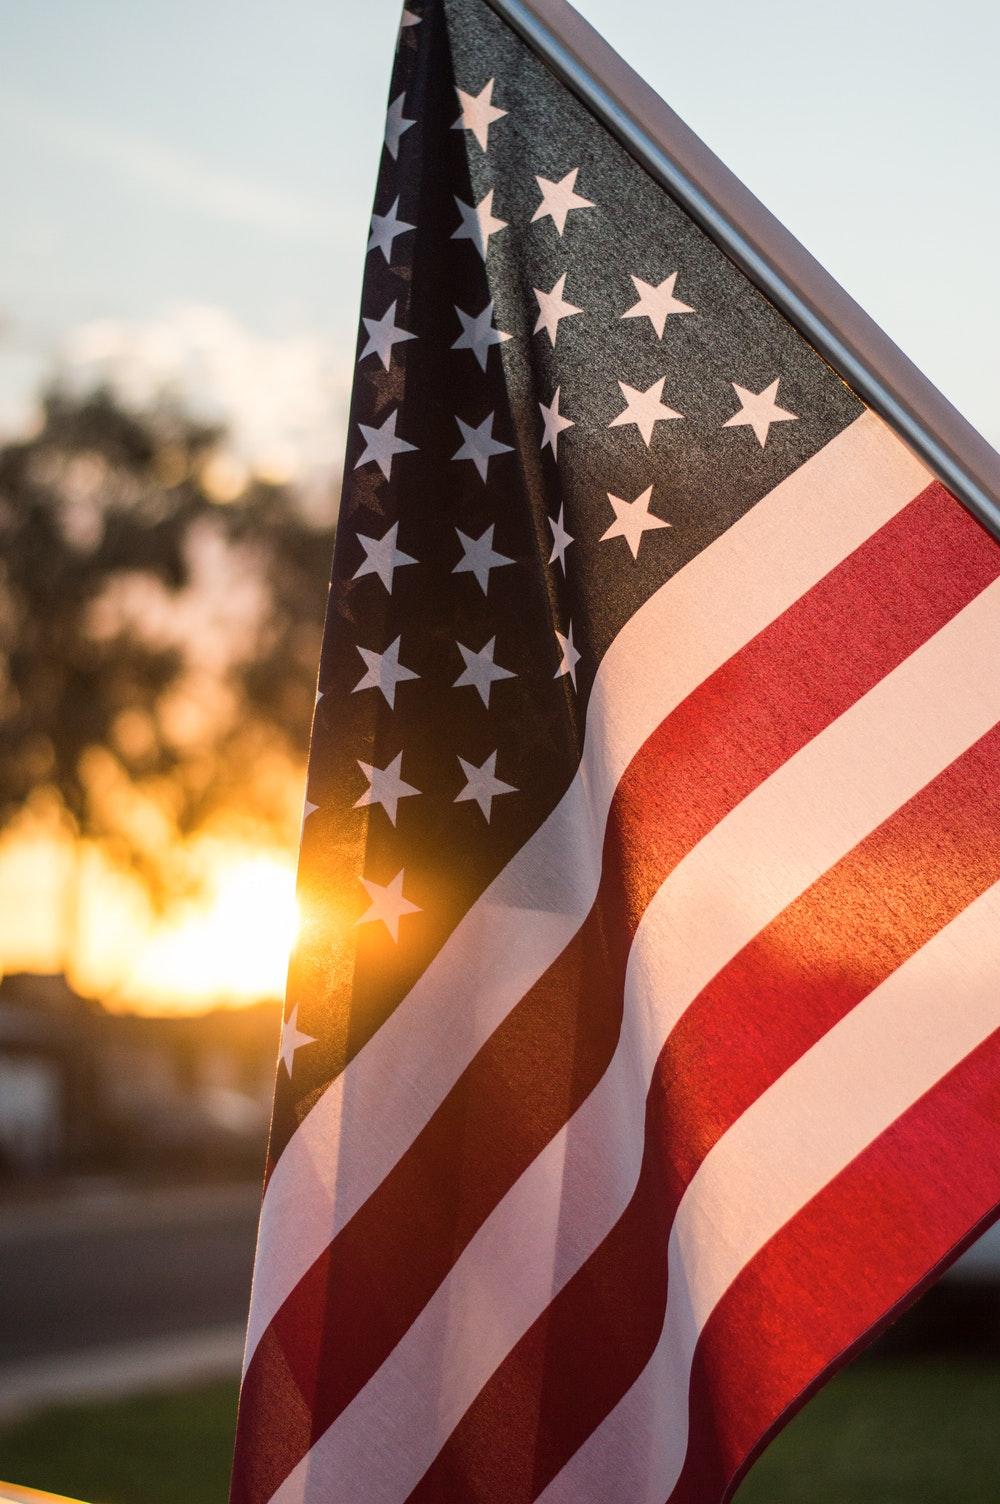 Bandera Usa Picture. Download Free Image